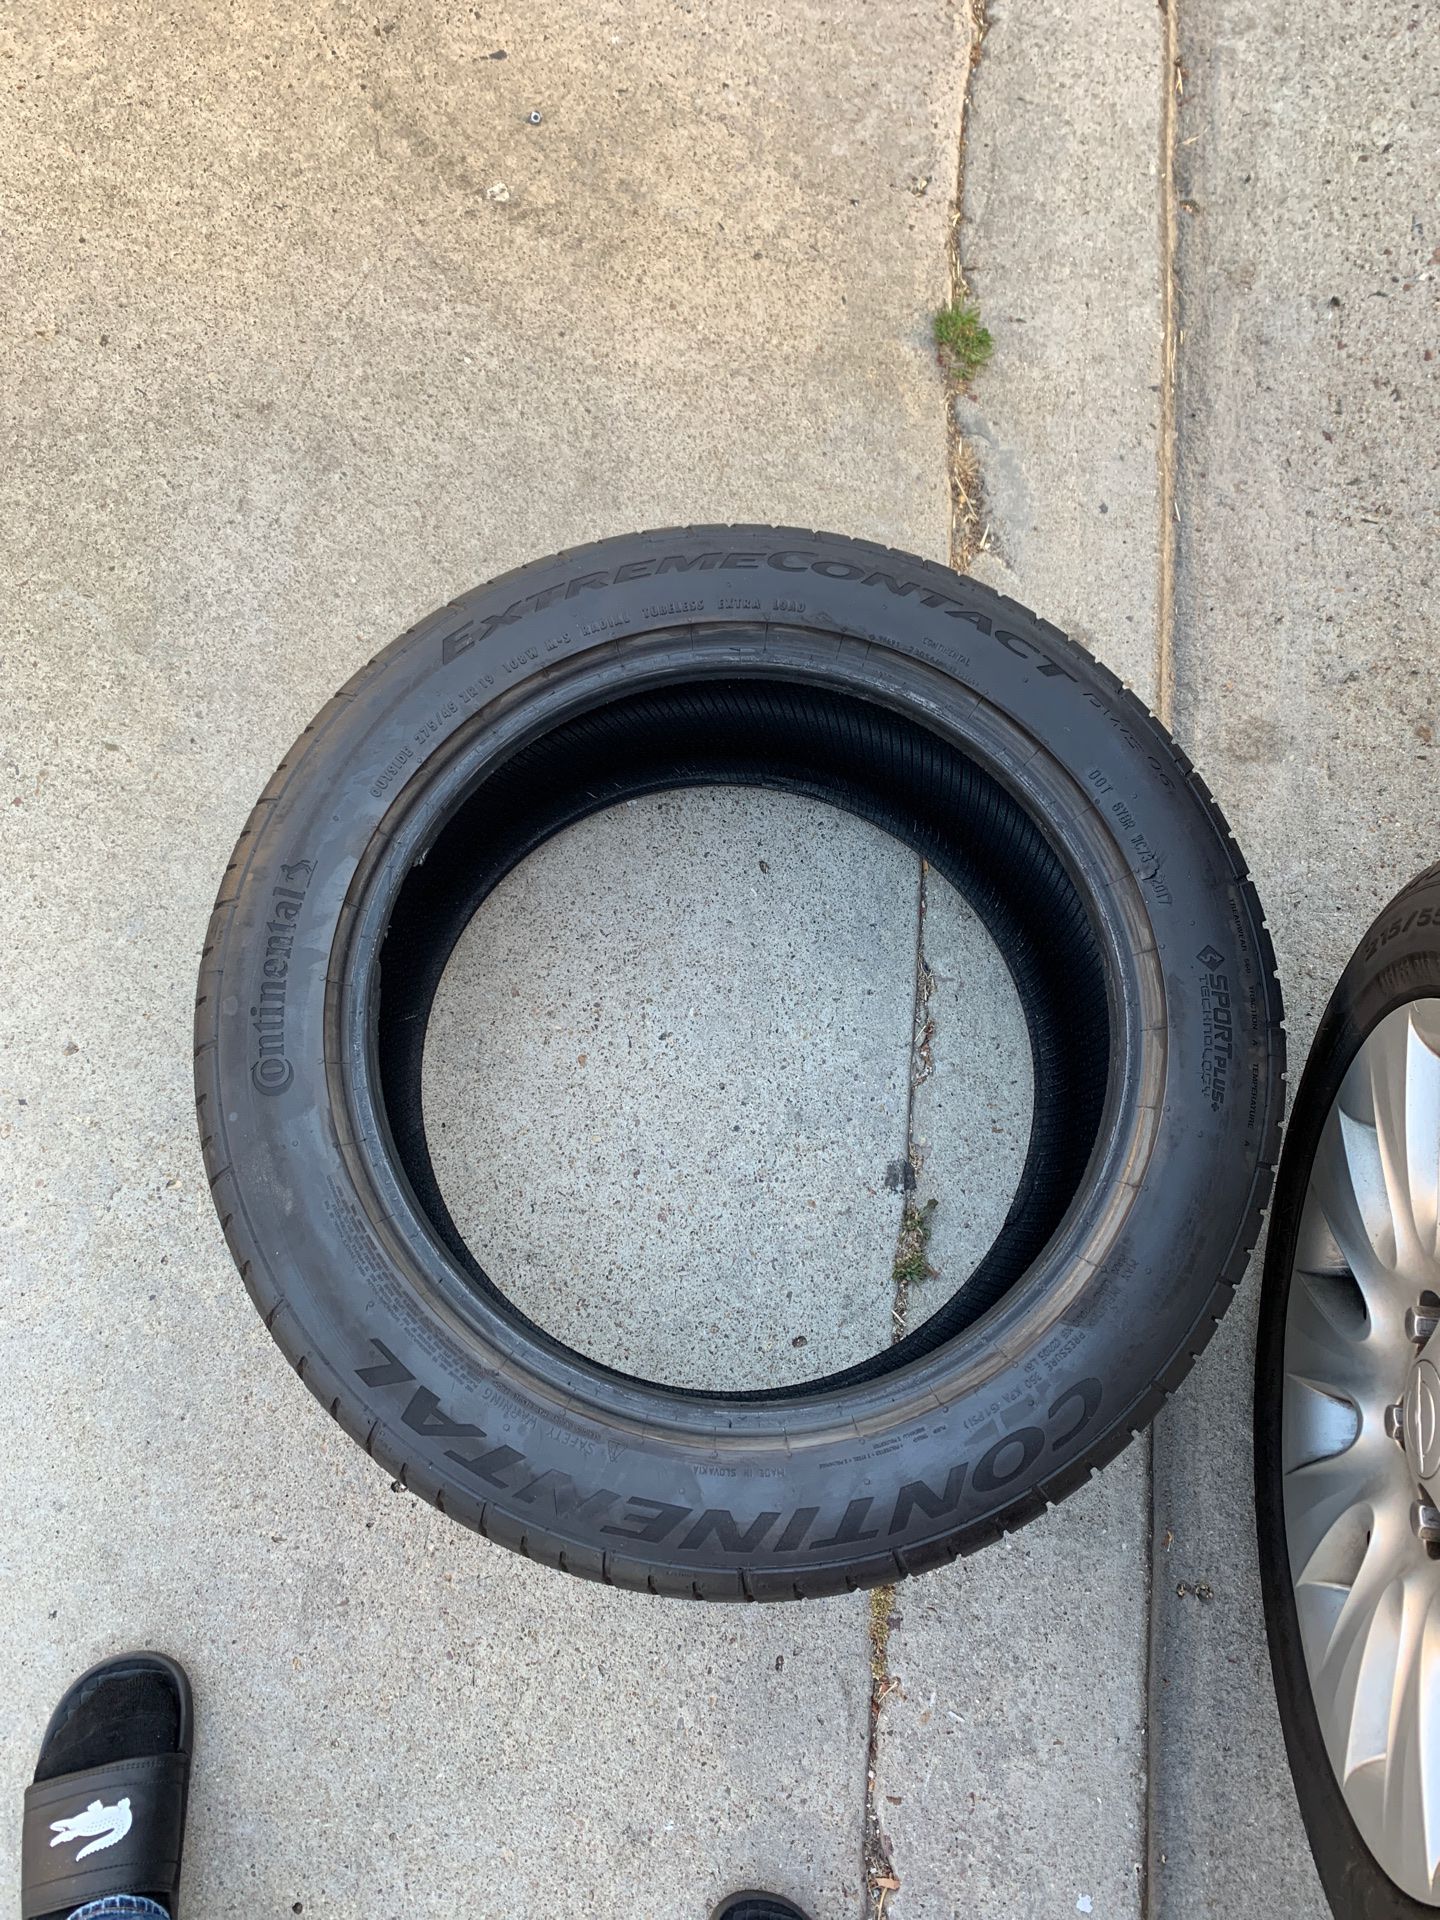 275/45/19 tires